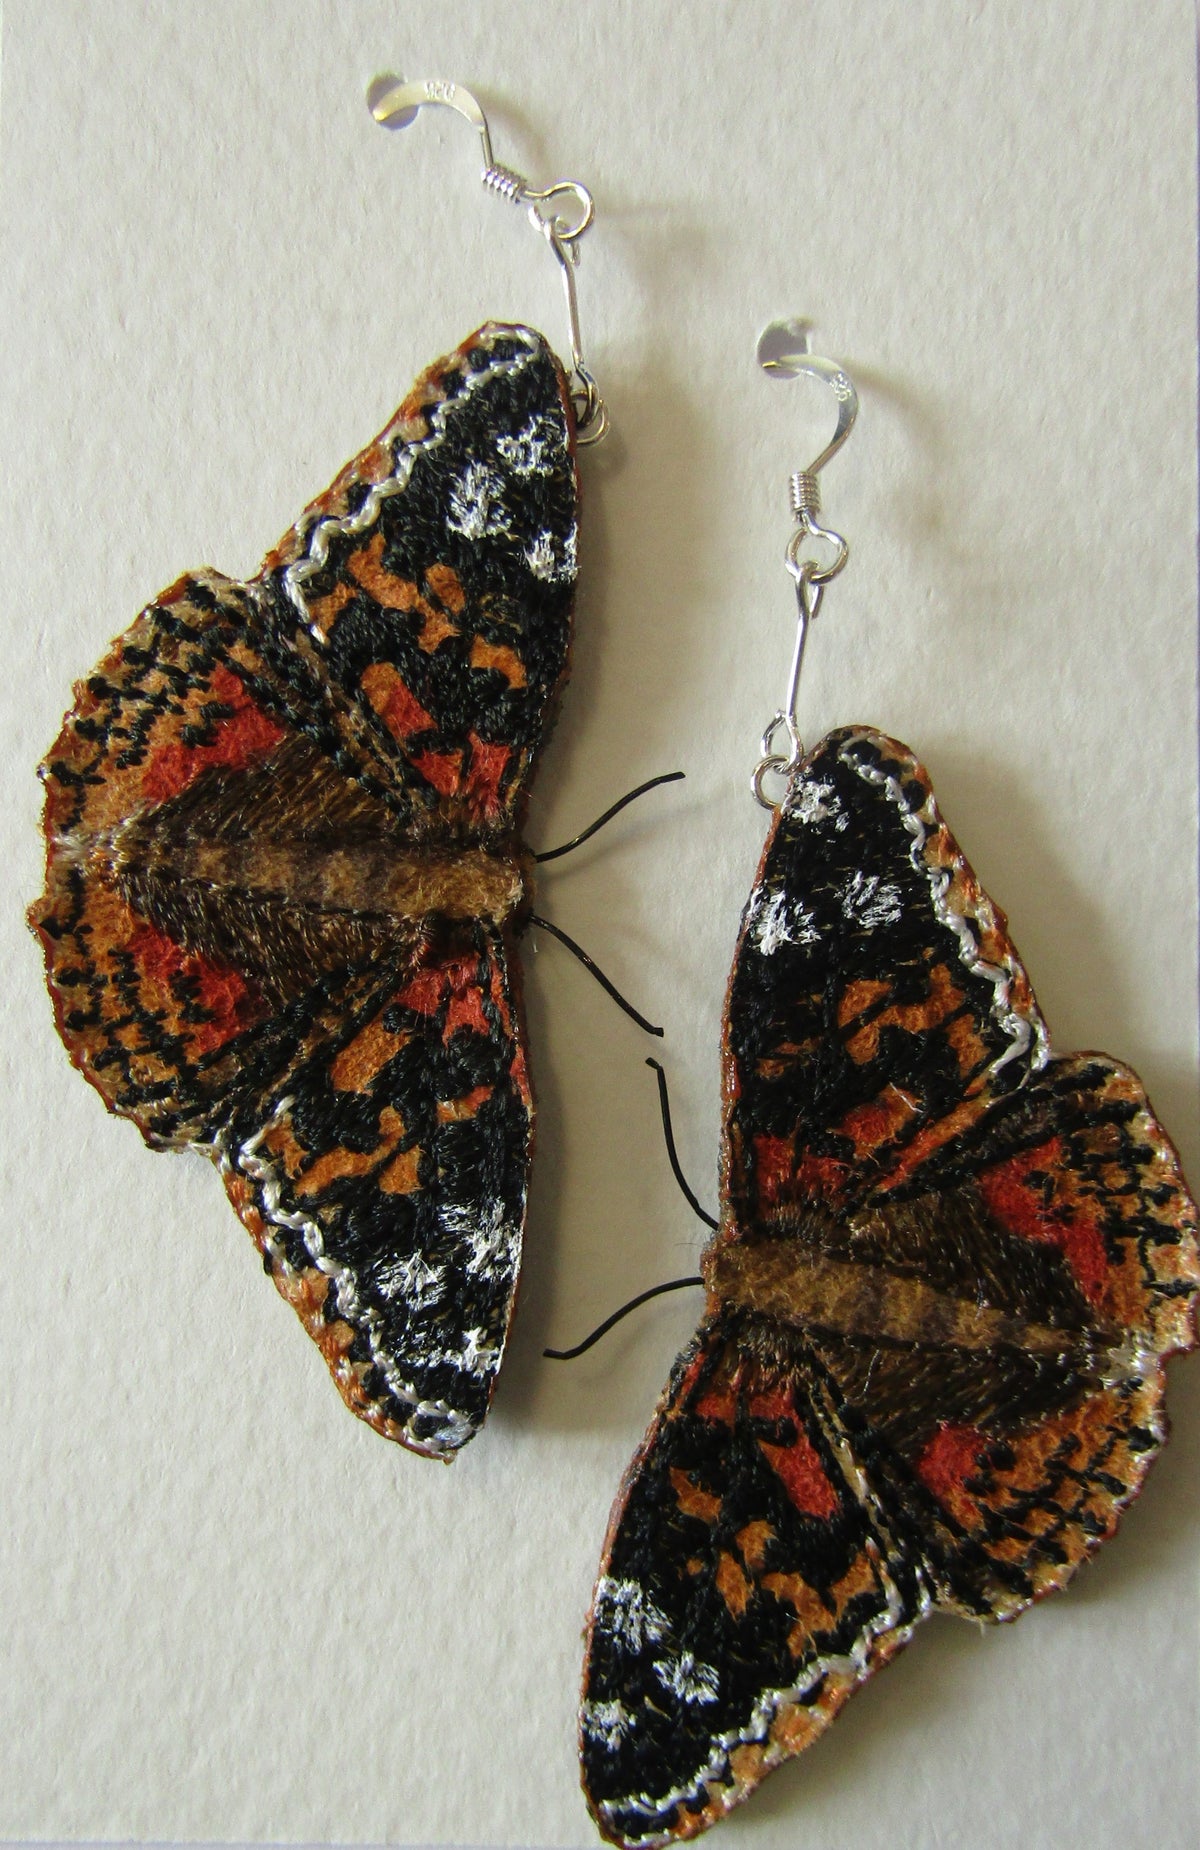 Painted Lady Butterfly Earrings by Vikki Lafford Garside